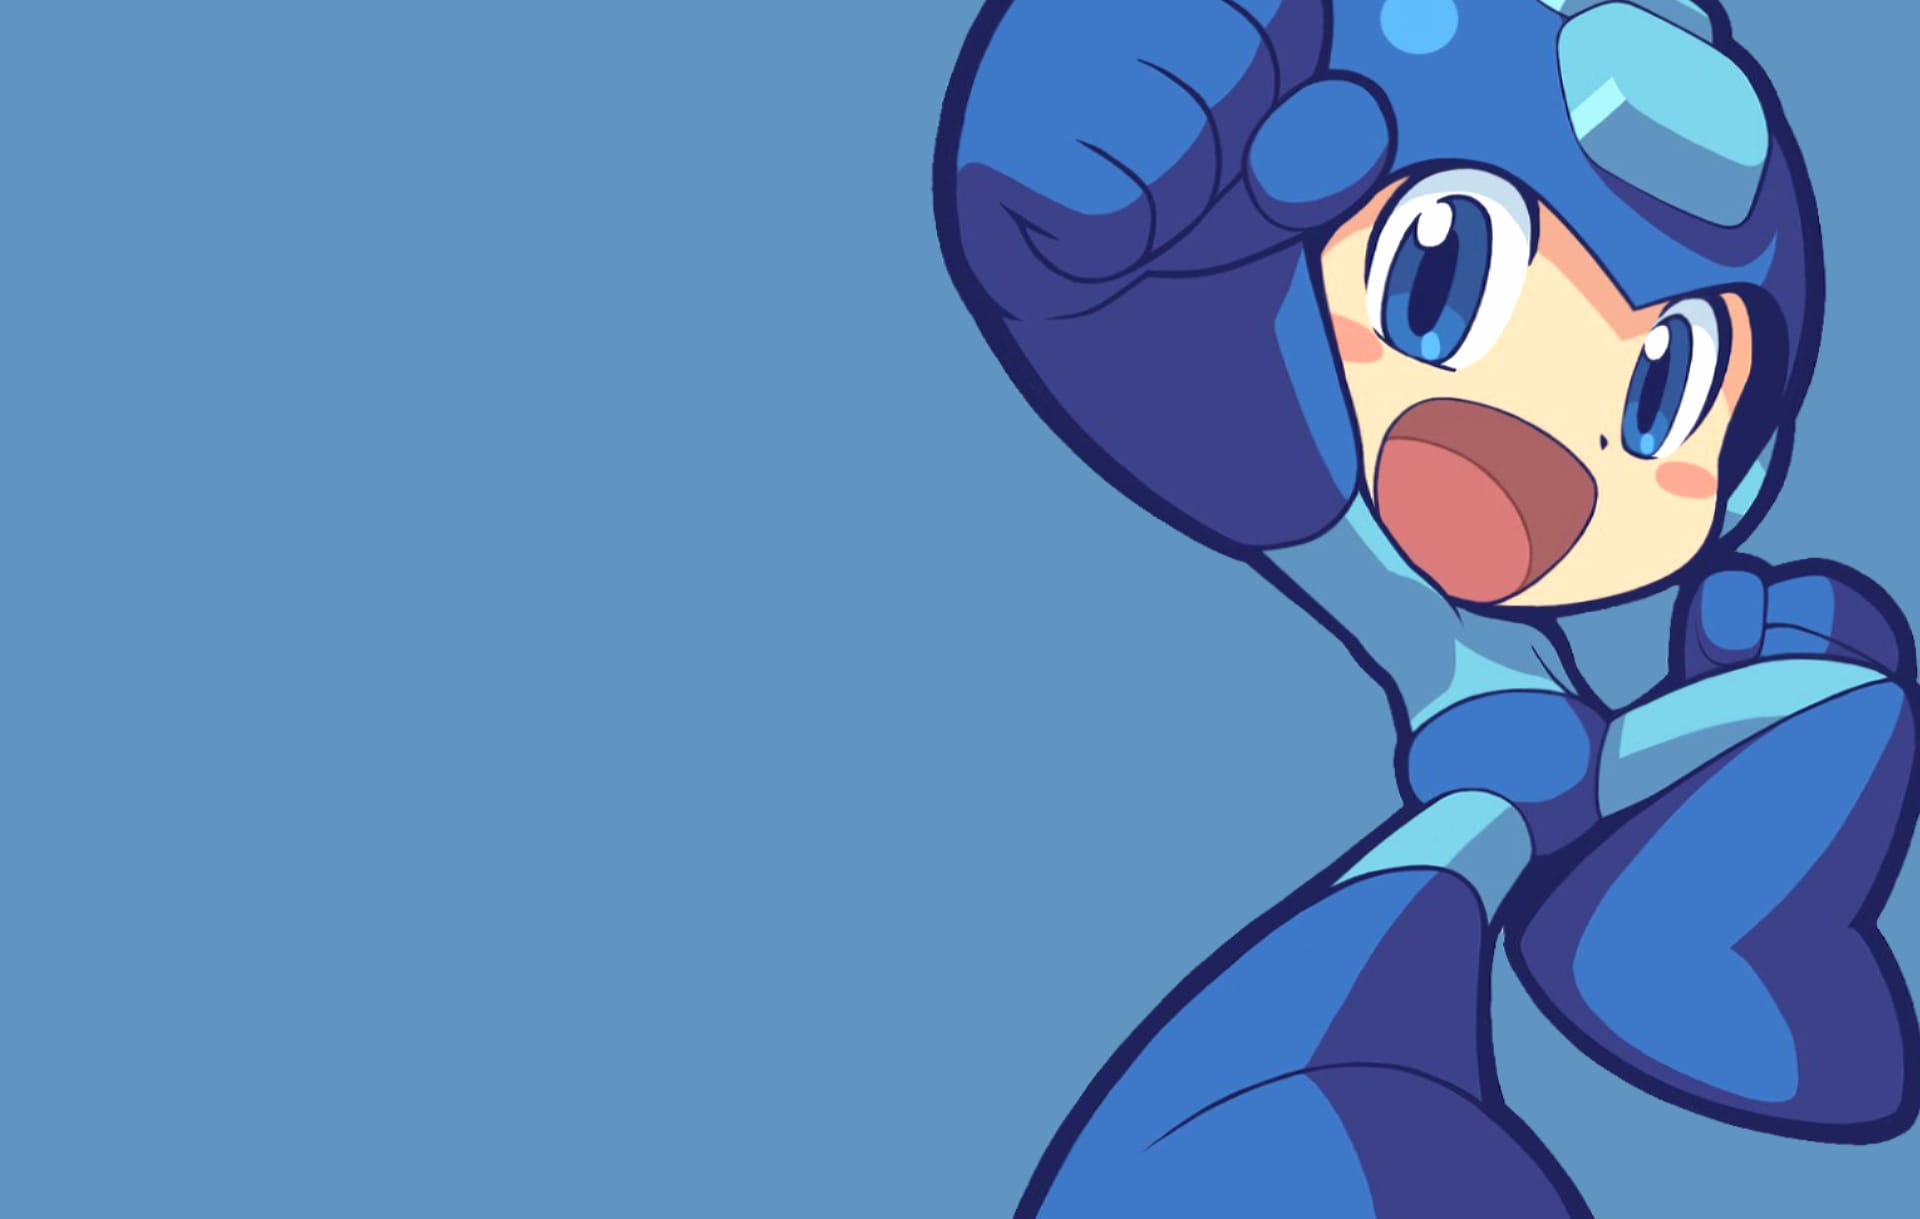 Mega Man Powered Up at 1024 x 1024 iPad size wallpapers HD quality